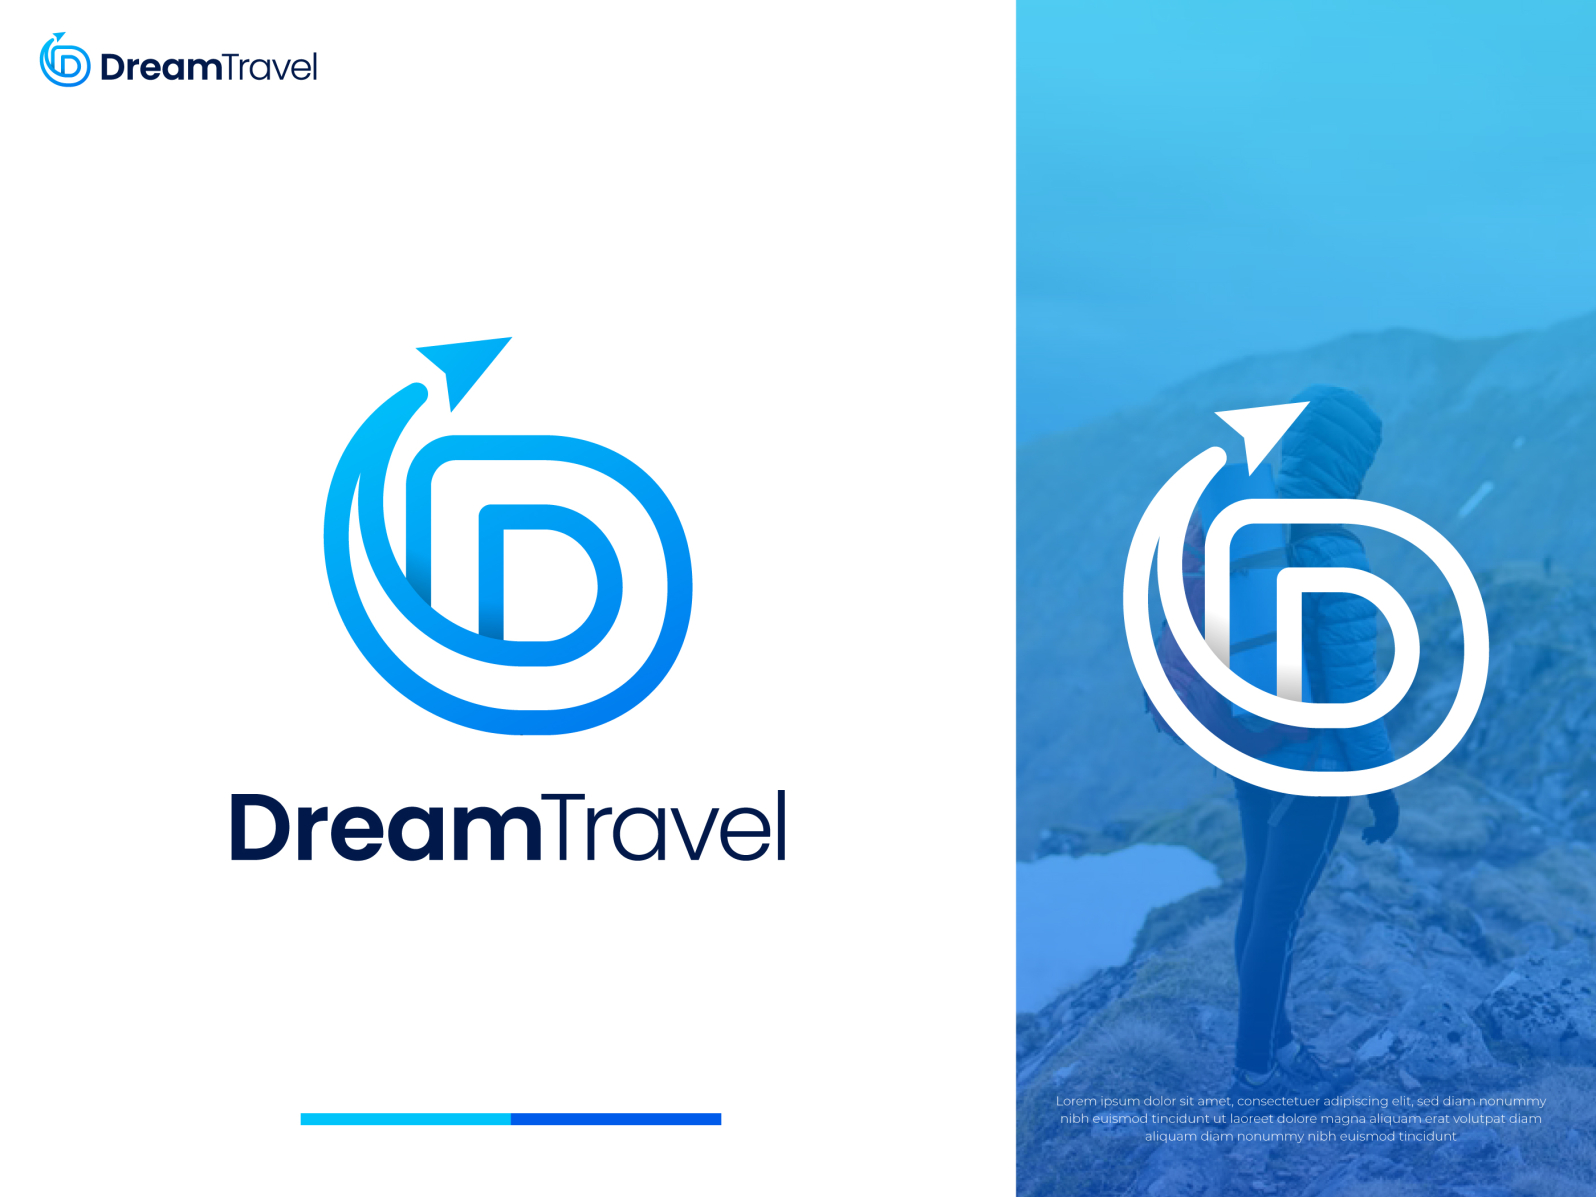 travel dreams travel agency